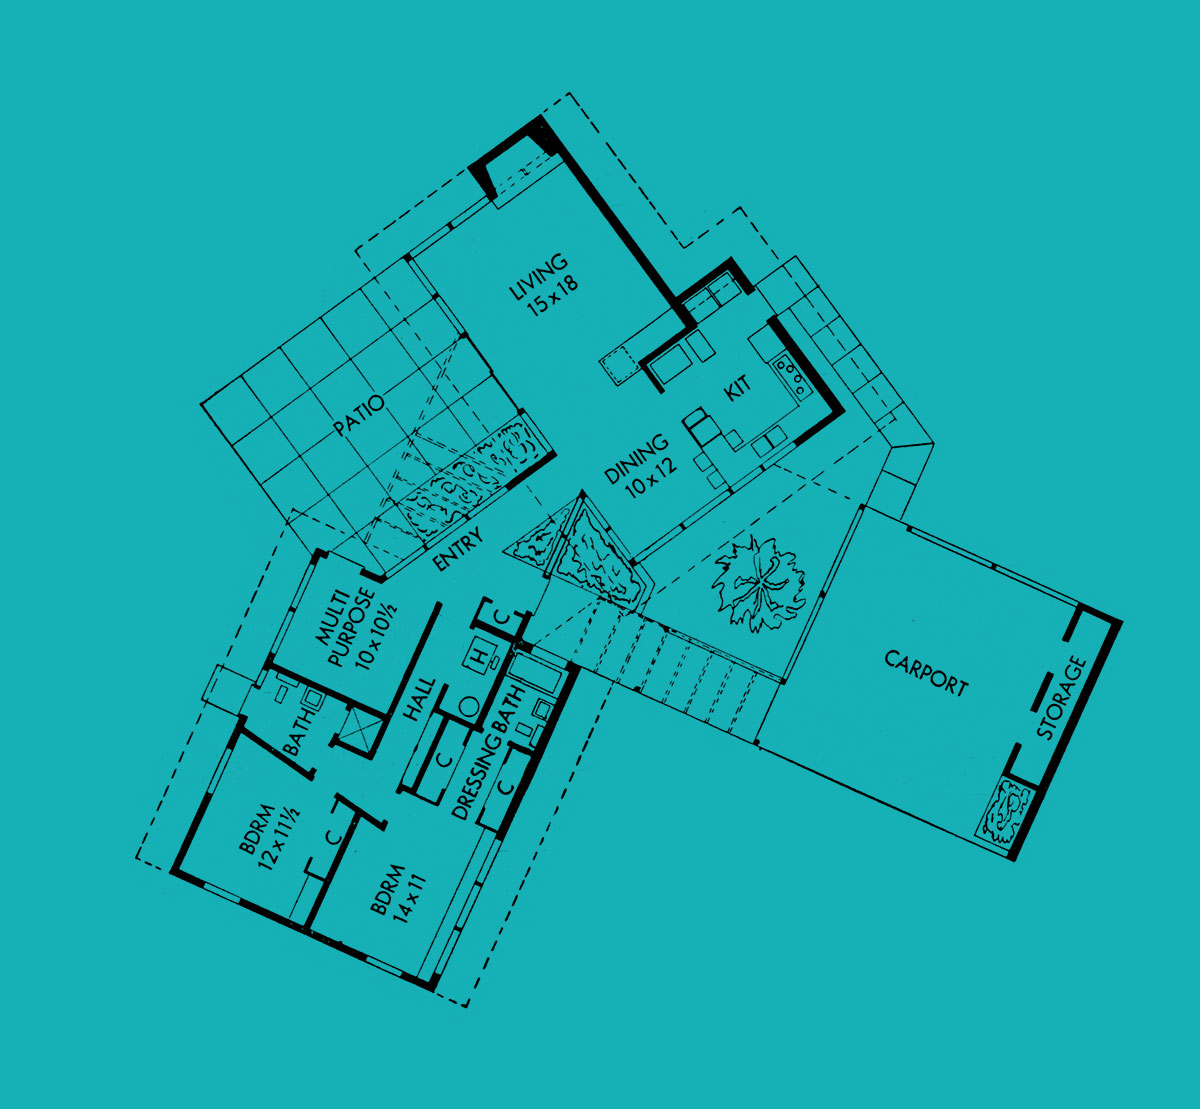 Floorplan of Fingado House 1 by Al Beadle